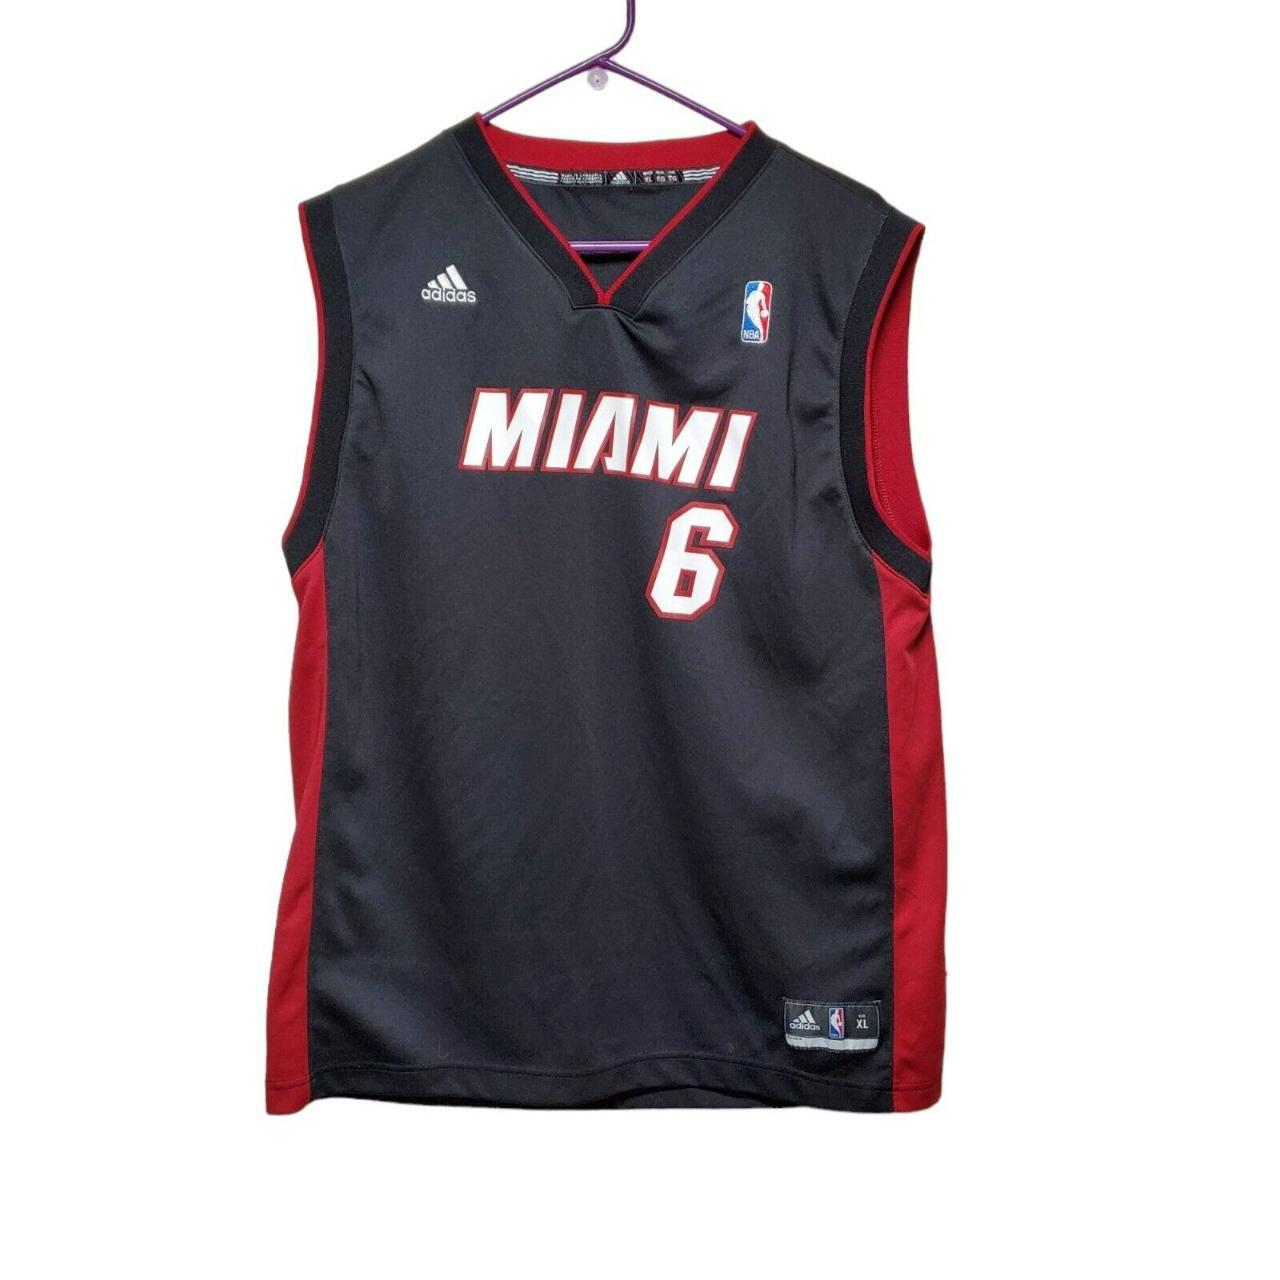 NBA, Shirts & Tops, Adidas Nba Miami Heat Lebron James Jersey